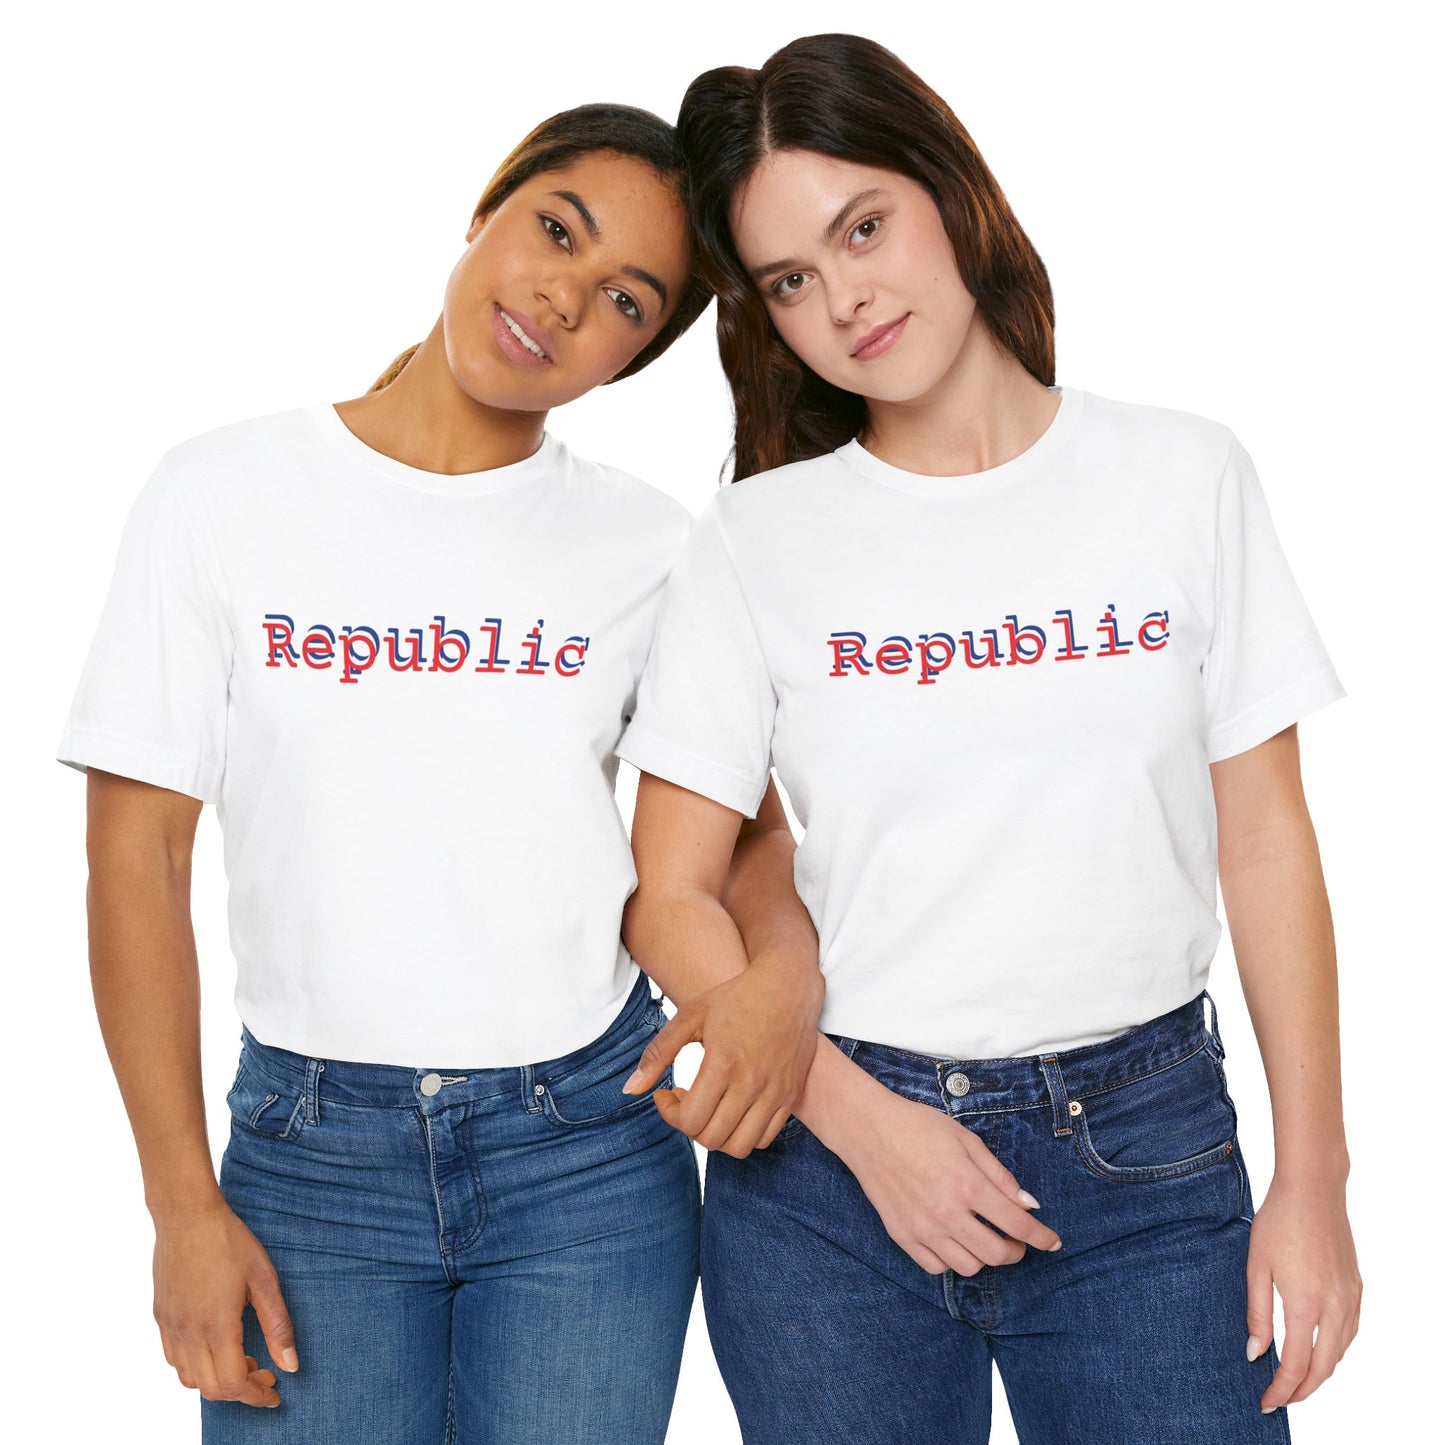 Republic - Hurts Shirts Collection